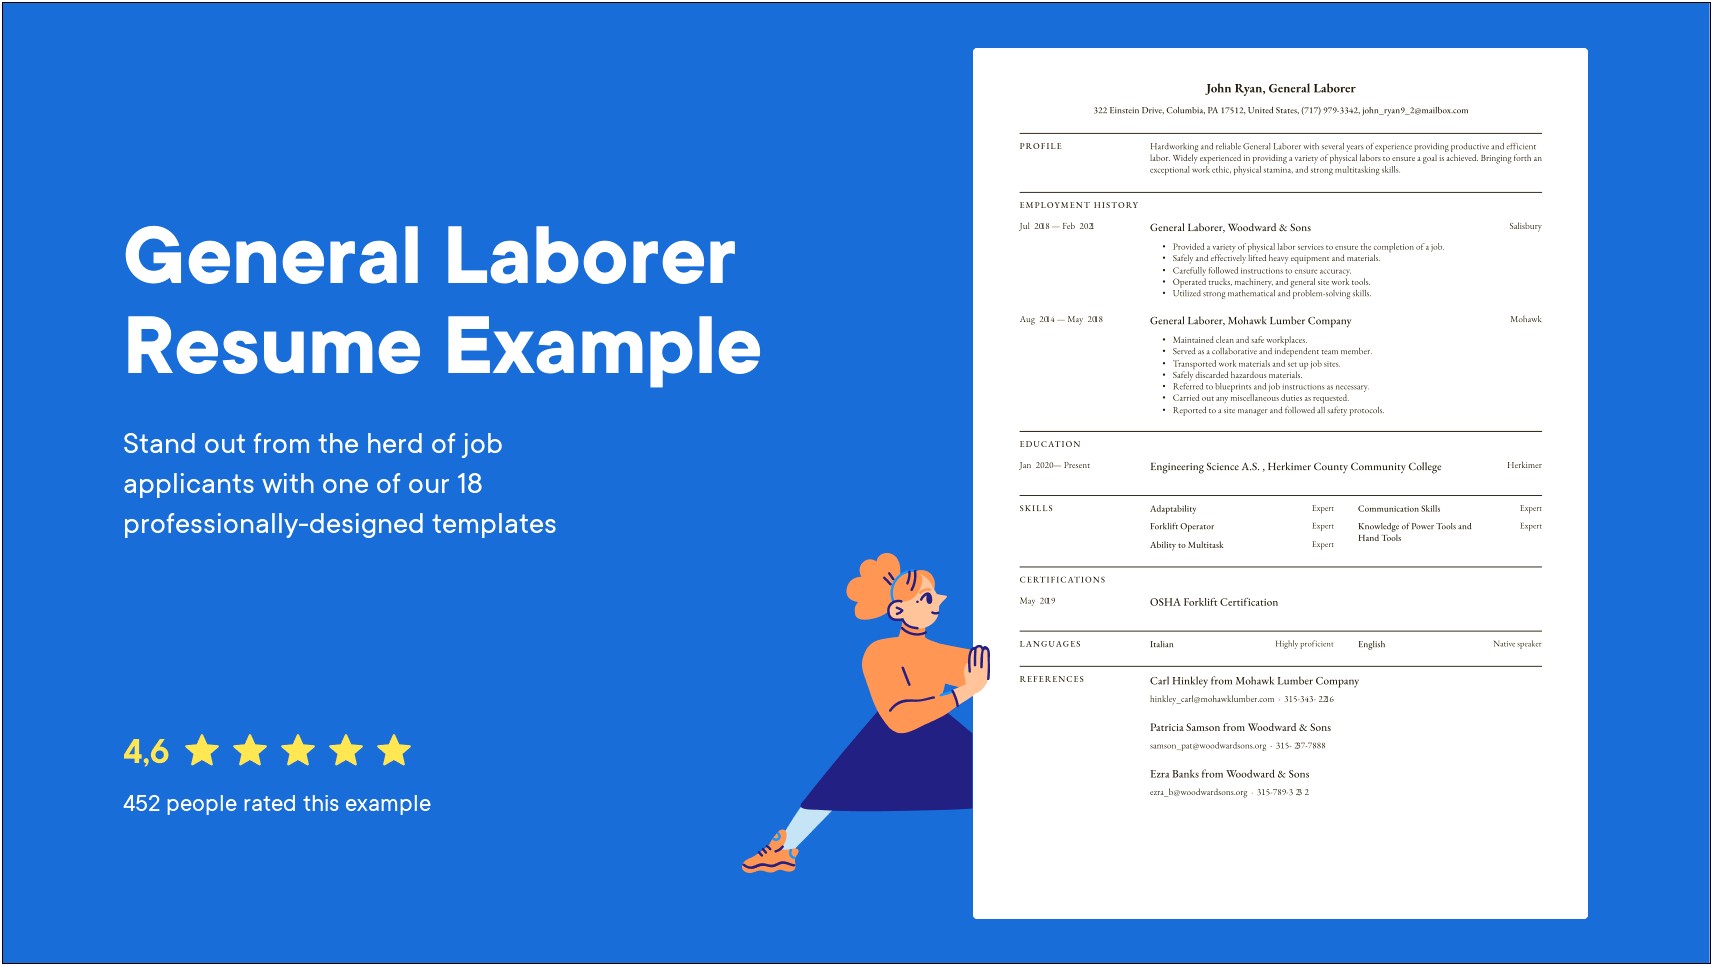 General Labourer Job Resume Example